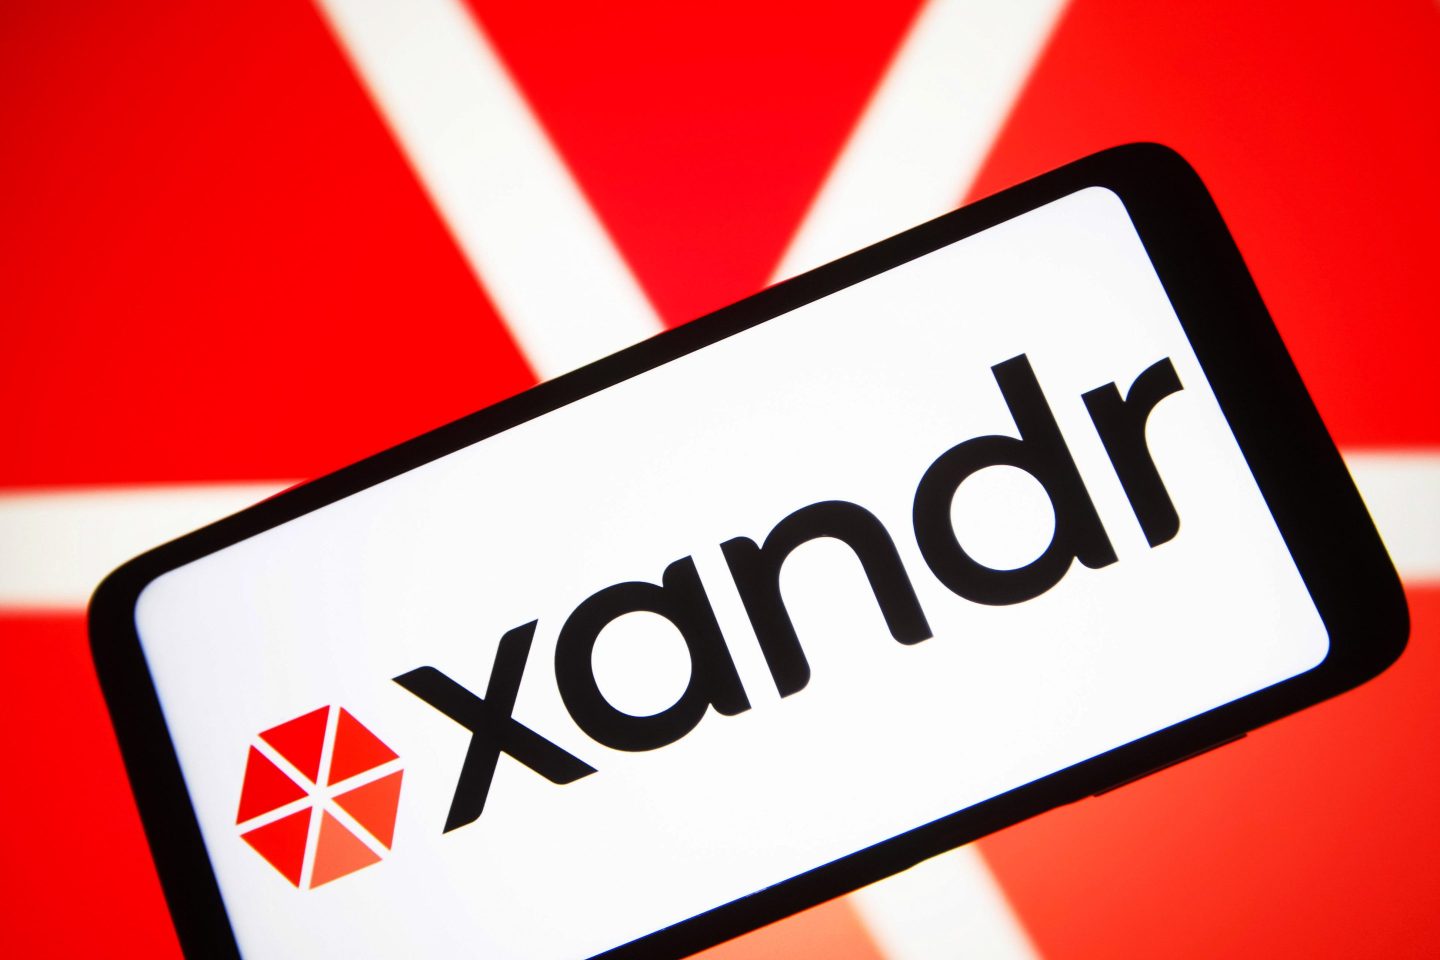 The Xandr Inc. logo is seen on a smartphone screen.